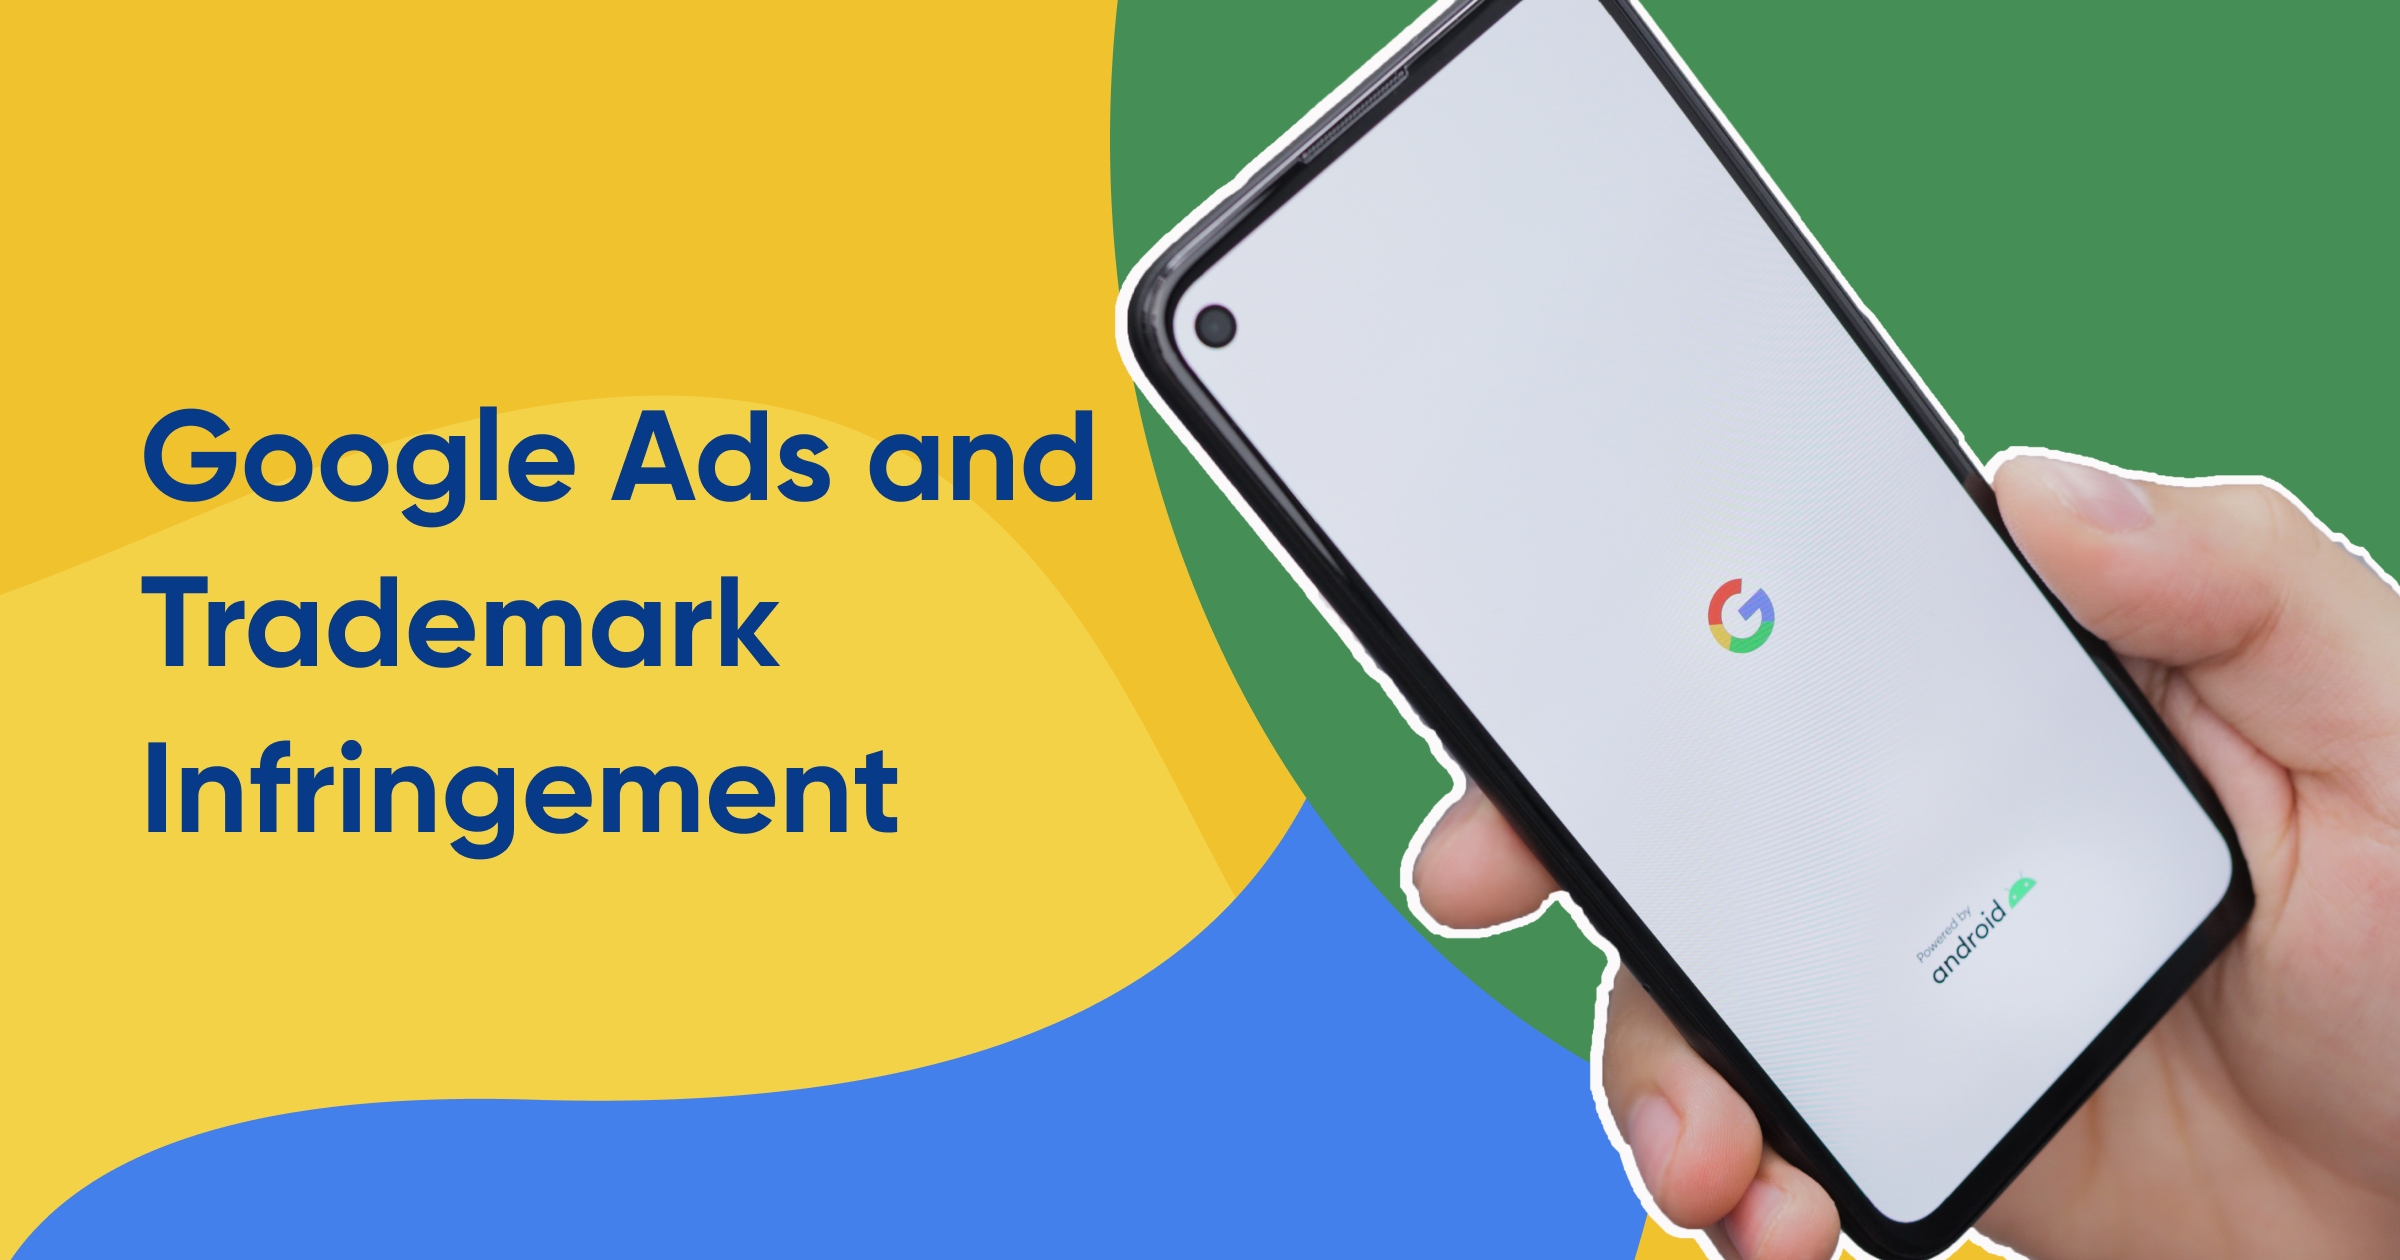 Google Ads and Trademark Infringement